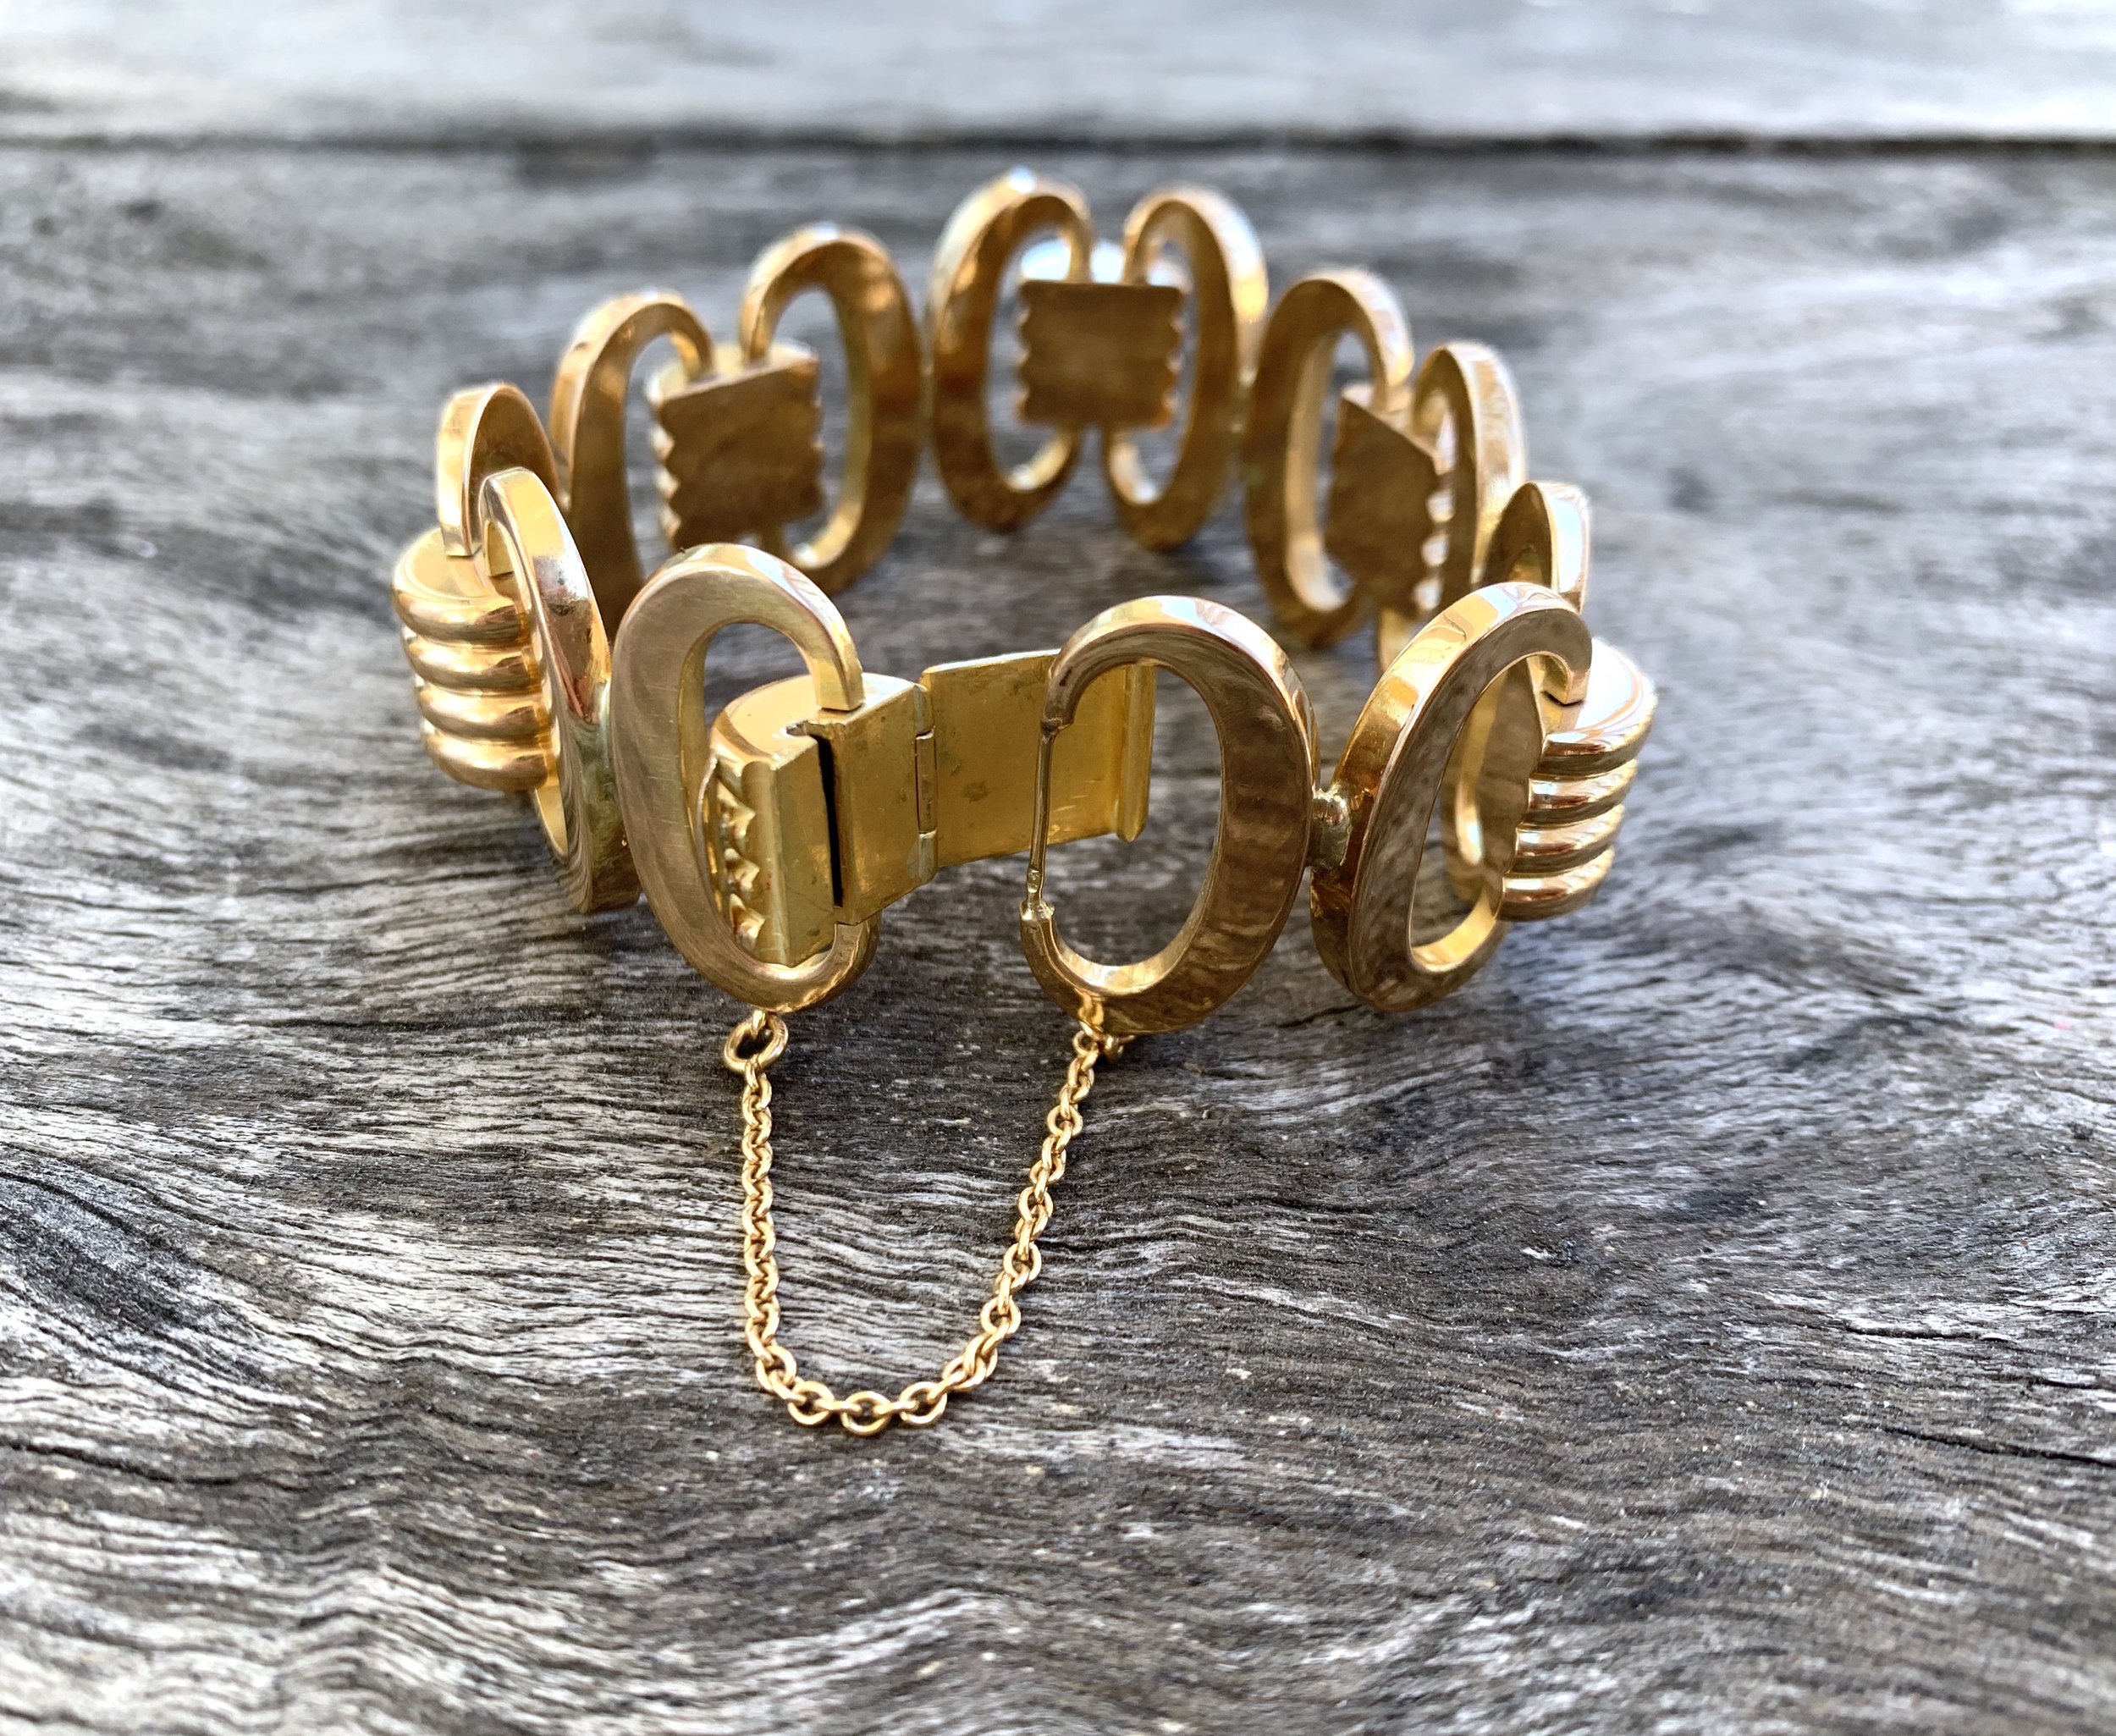 Bracelet vintage en or jaune — Bijoux Anciens Paris : E-shop de Bijoux  Anciens & Vintage de luxe